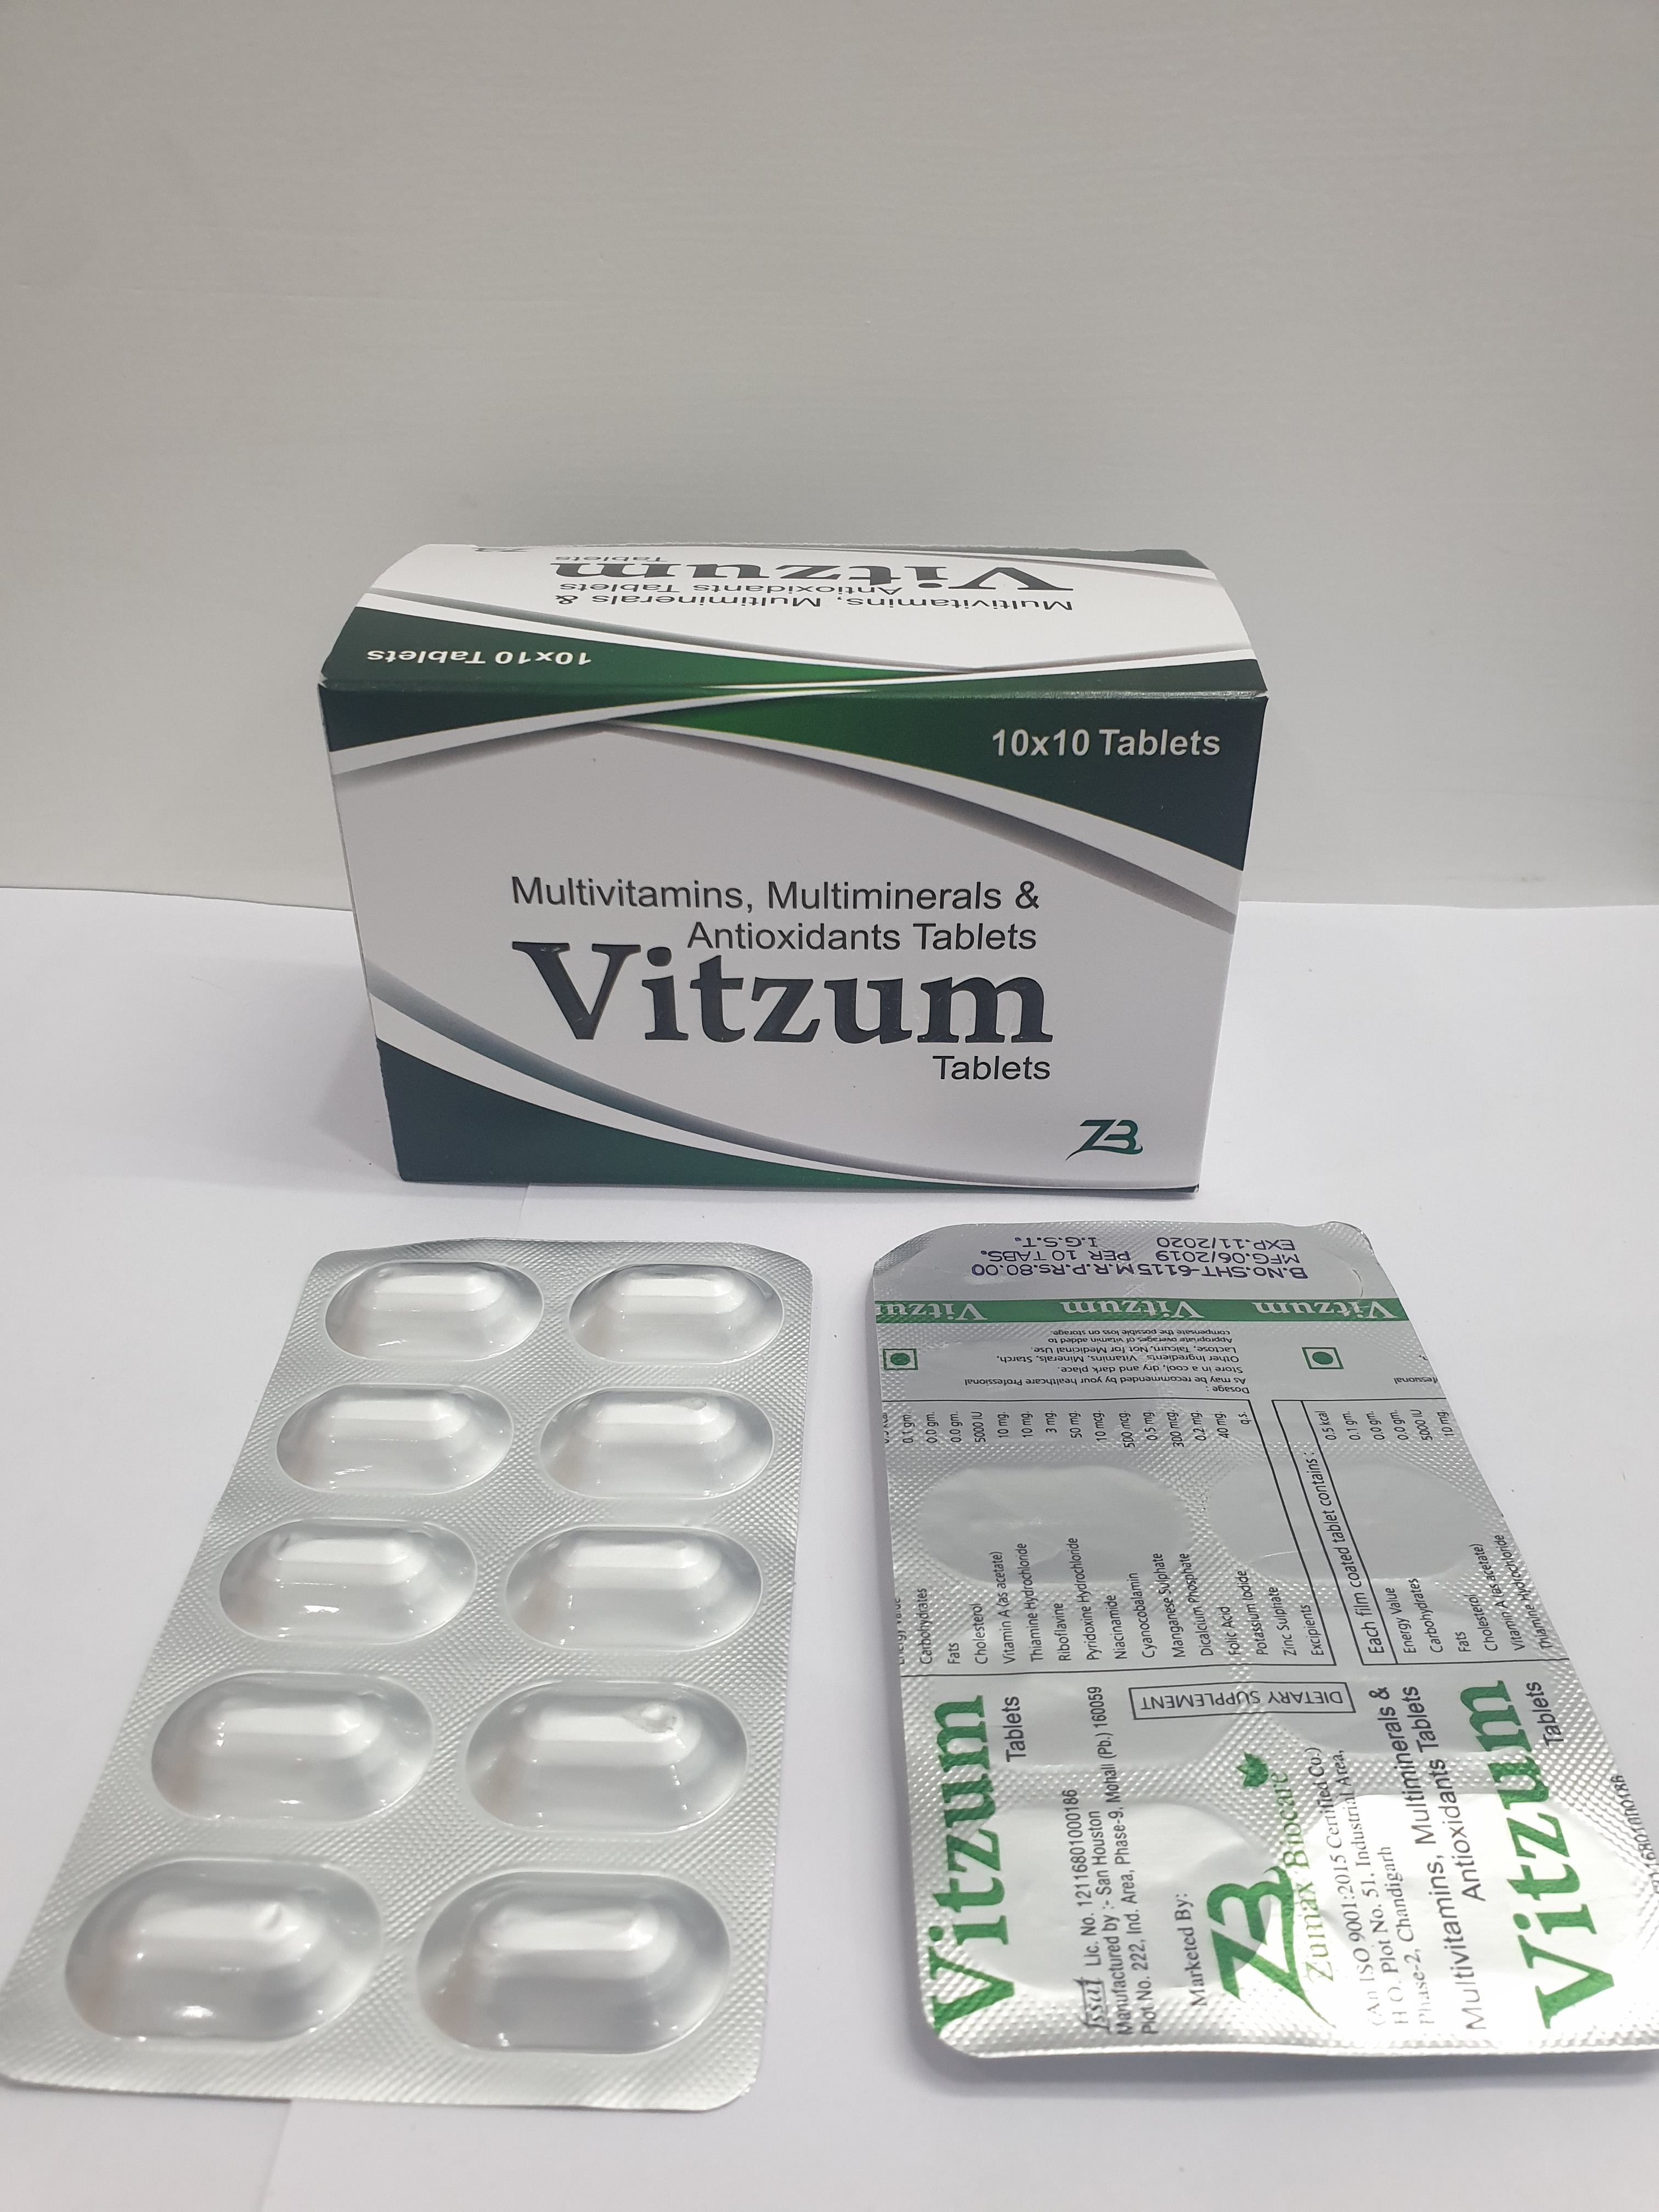 Product Name: Vitzum, Compositions of Vitzum are Multivitamins, Multiminerals & Antioxidants Tablets - Zumax Biocare